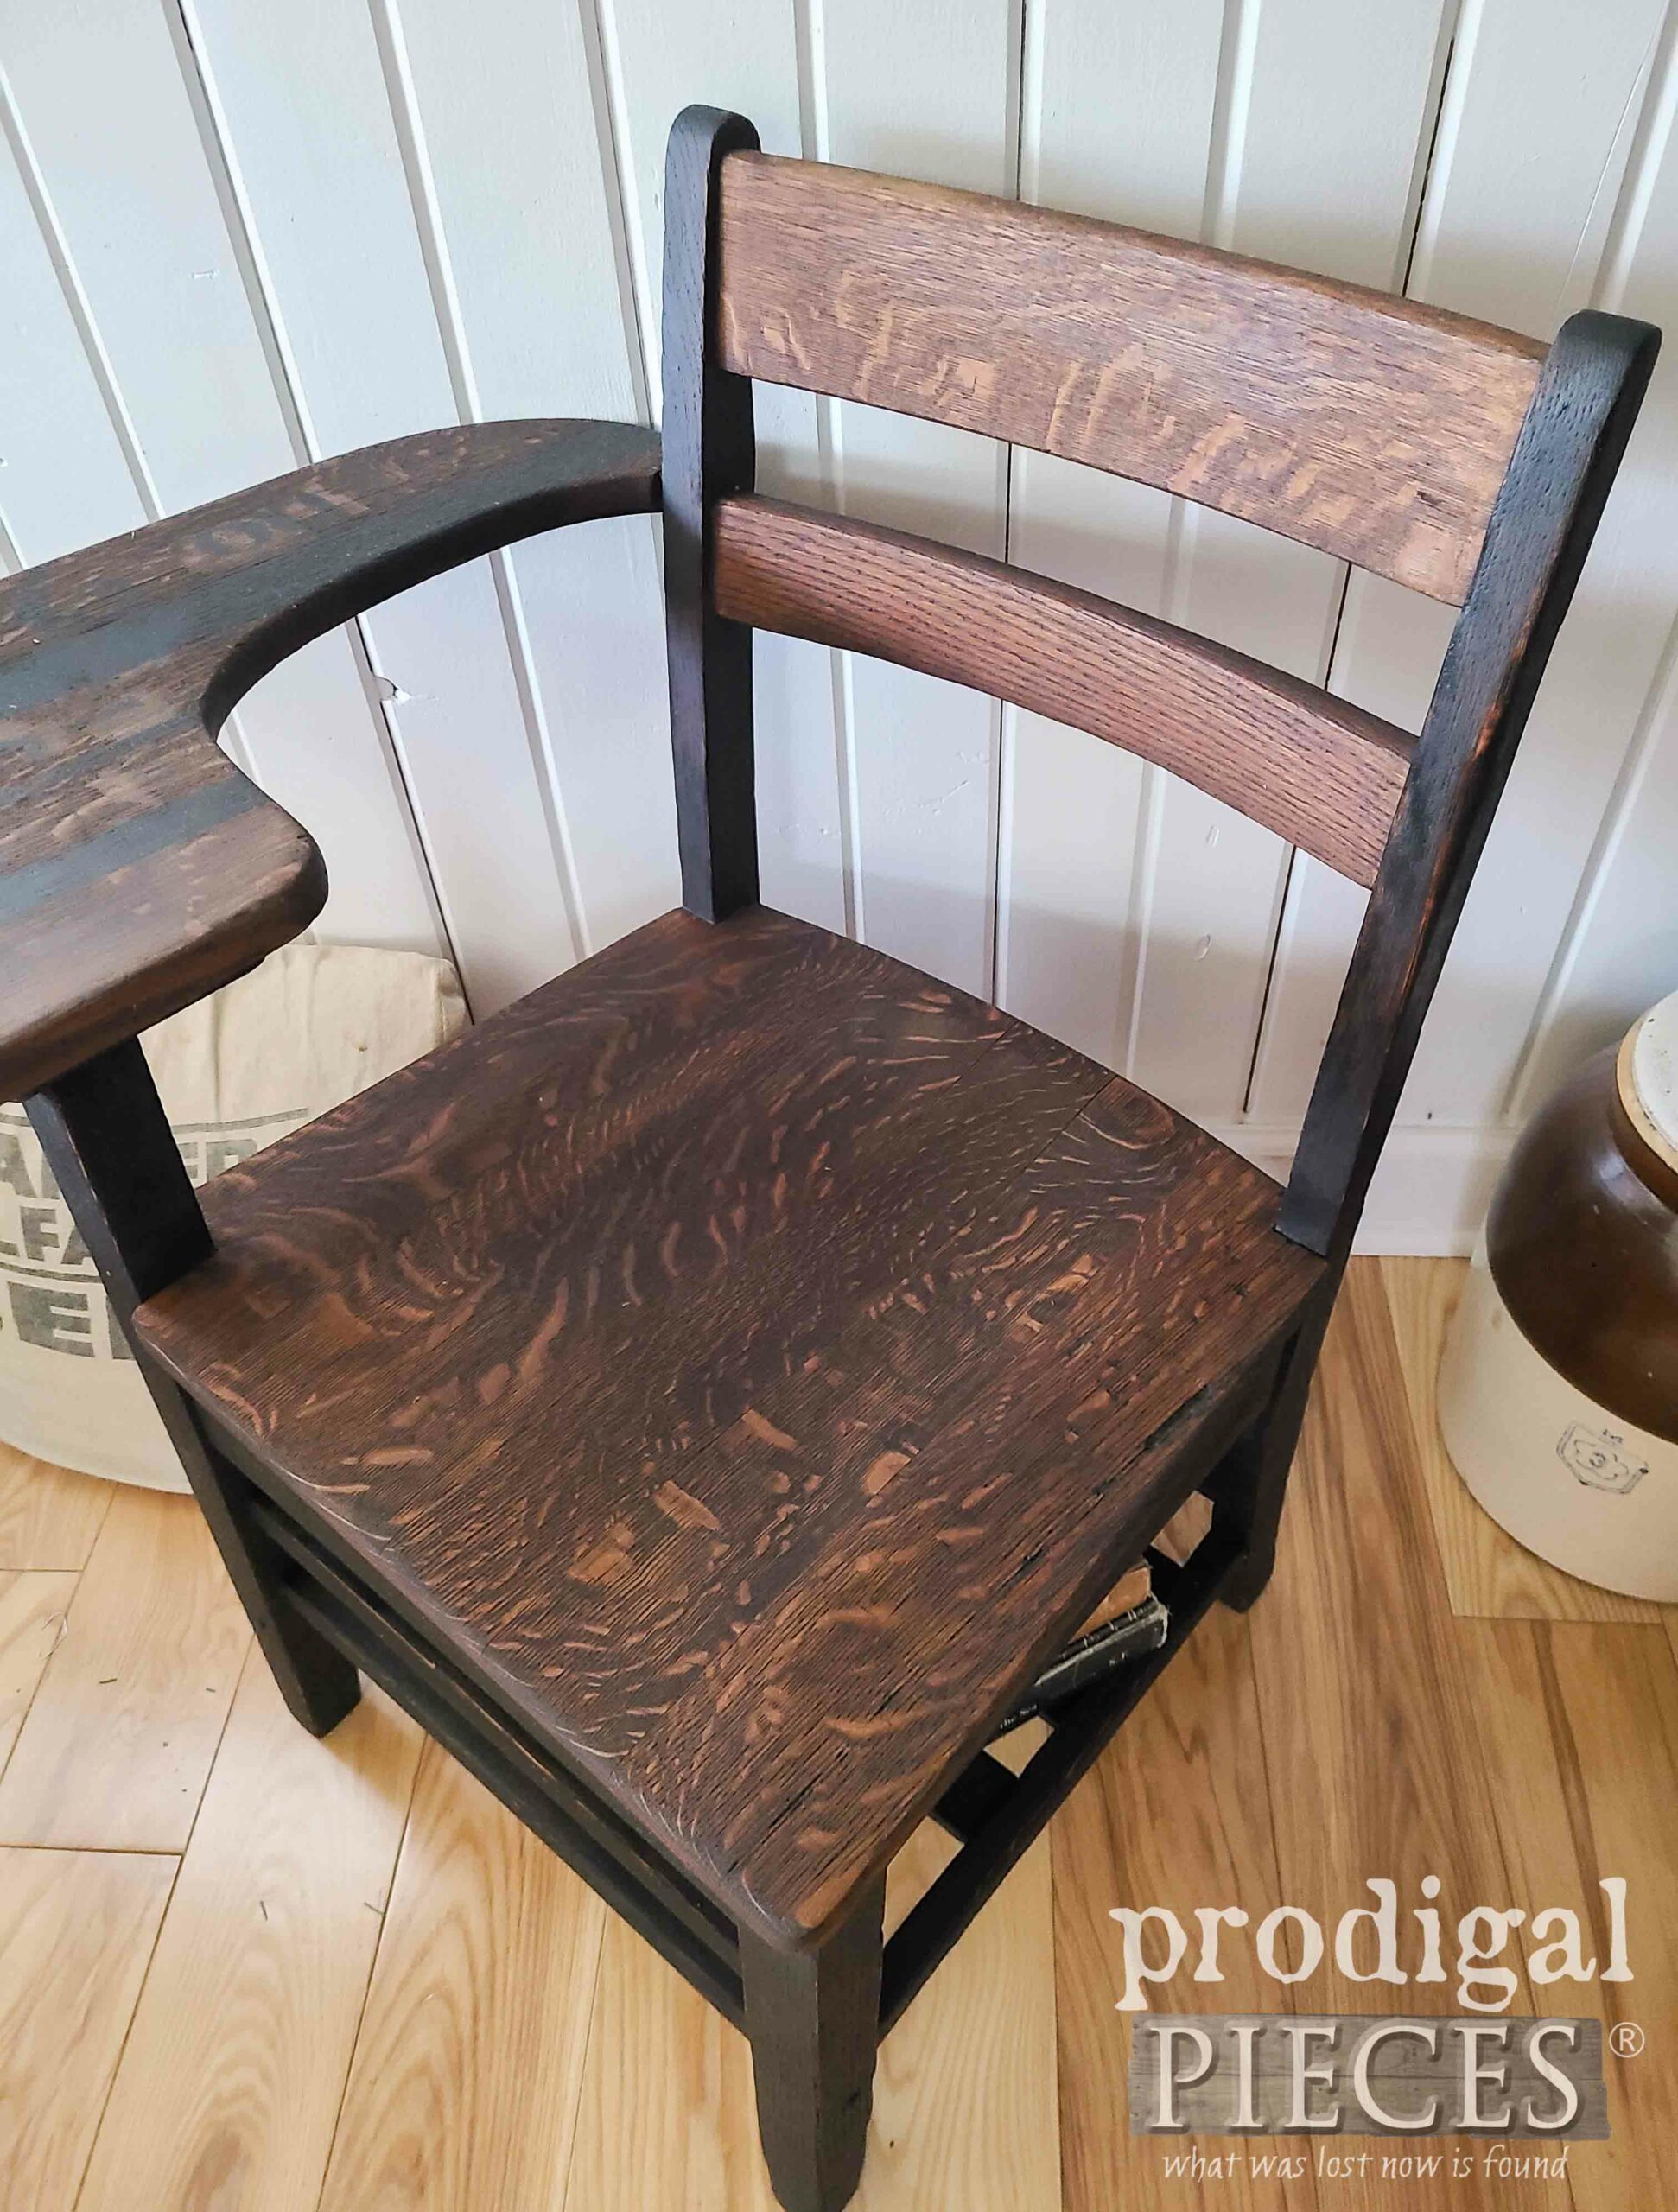 Solid Oak Vintage School Desk for Farmhouse Style by Larissa of Prodigal Pieces | prodigalpieces.com #prodigalpieces #industrial #farmhouse #furniture